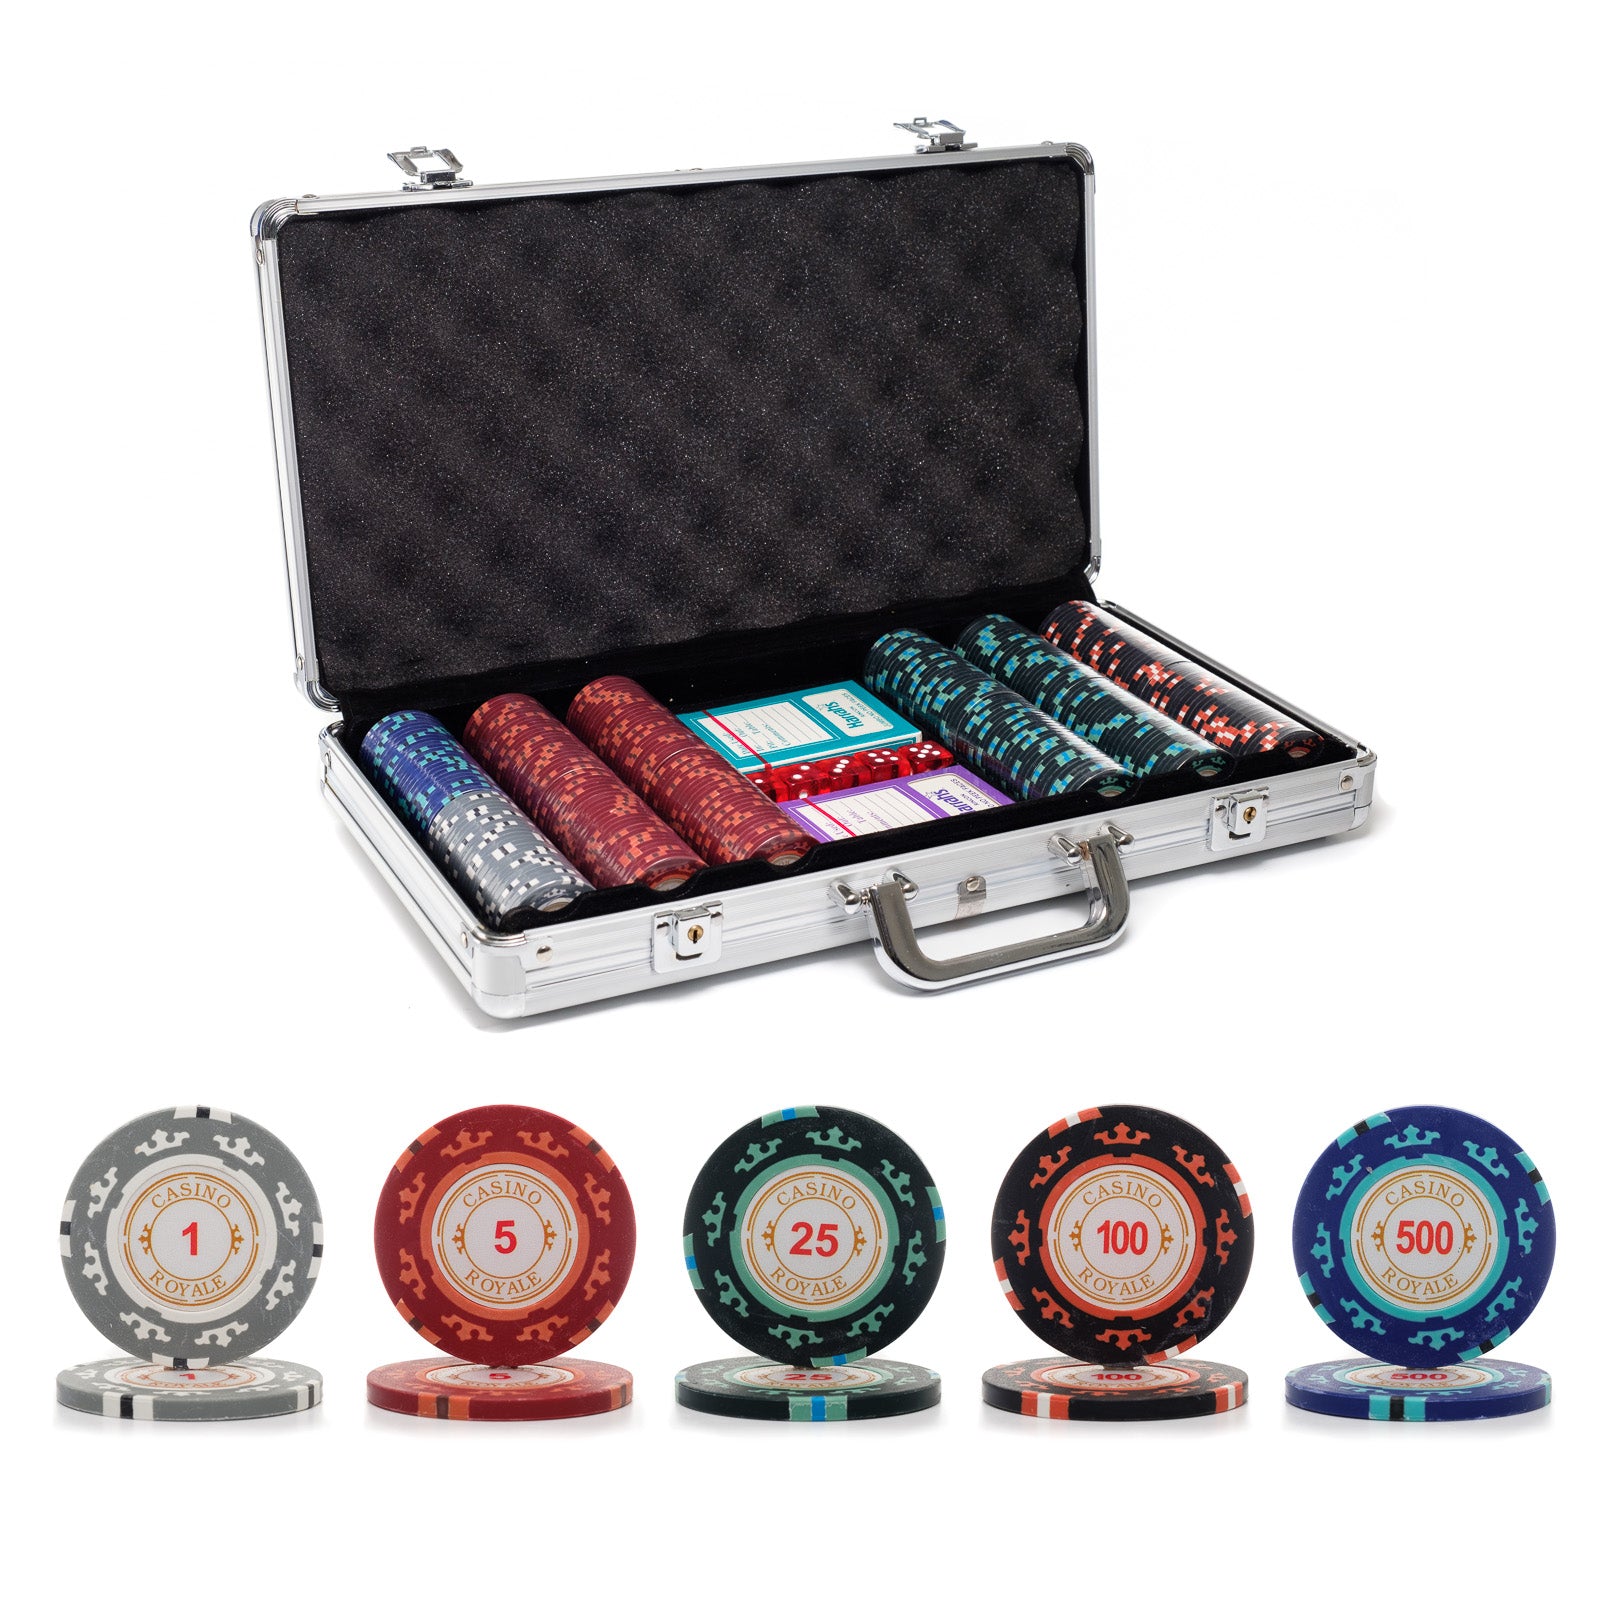 300 pc. 14g Casino Royale Poker Chip Set with Aluminum Case